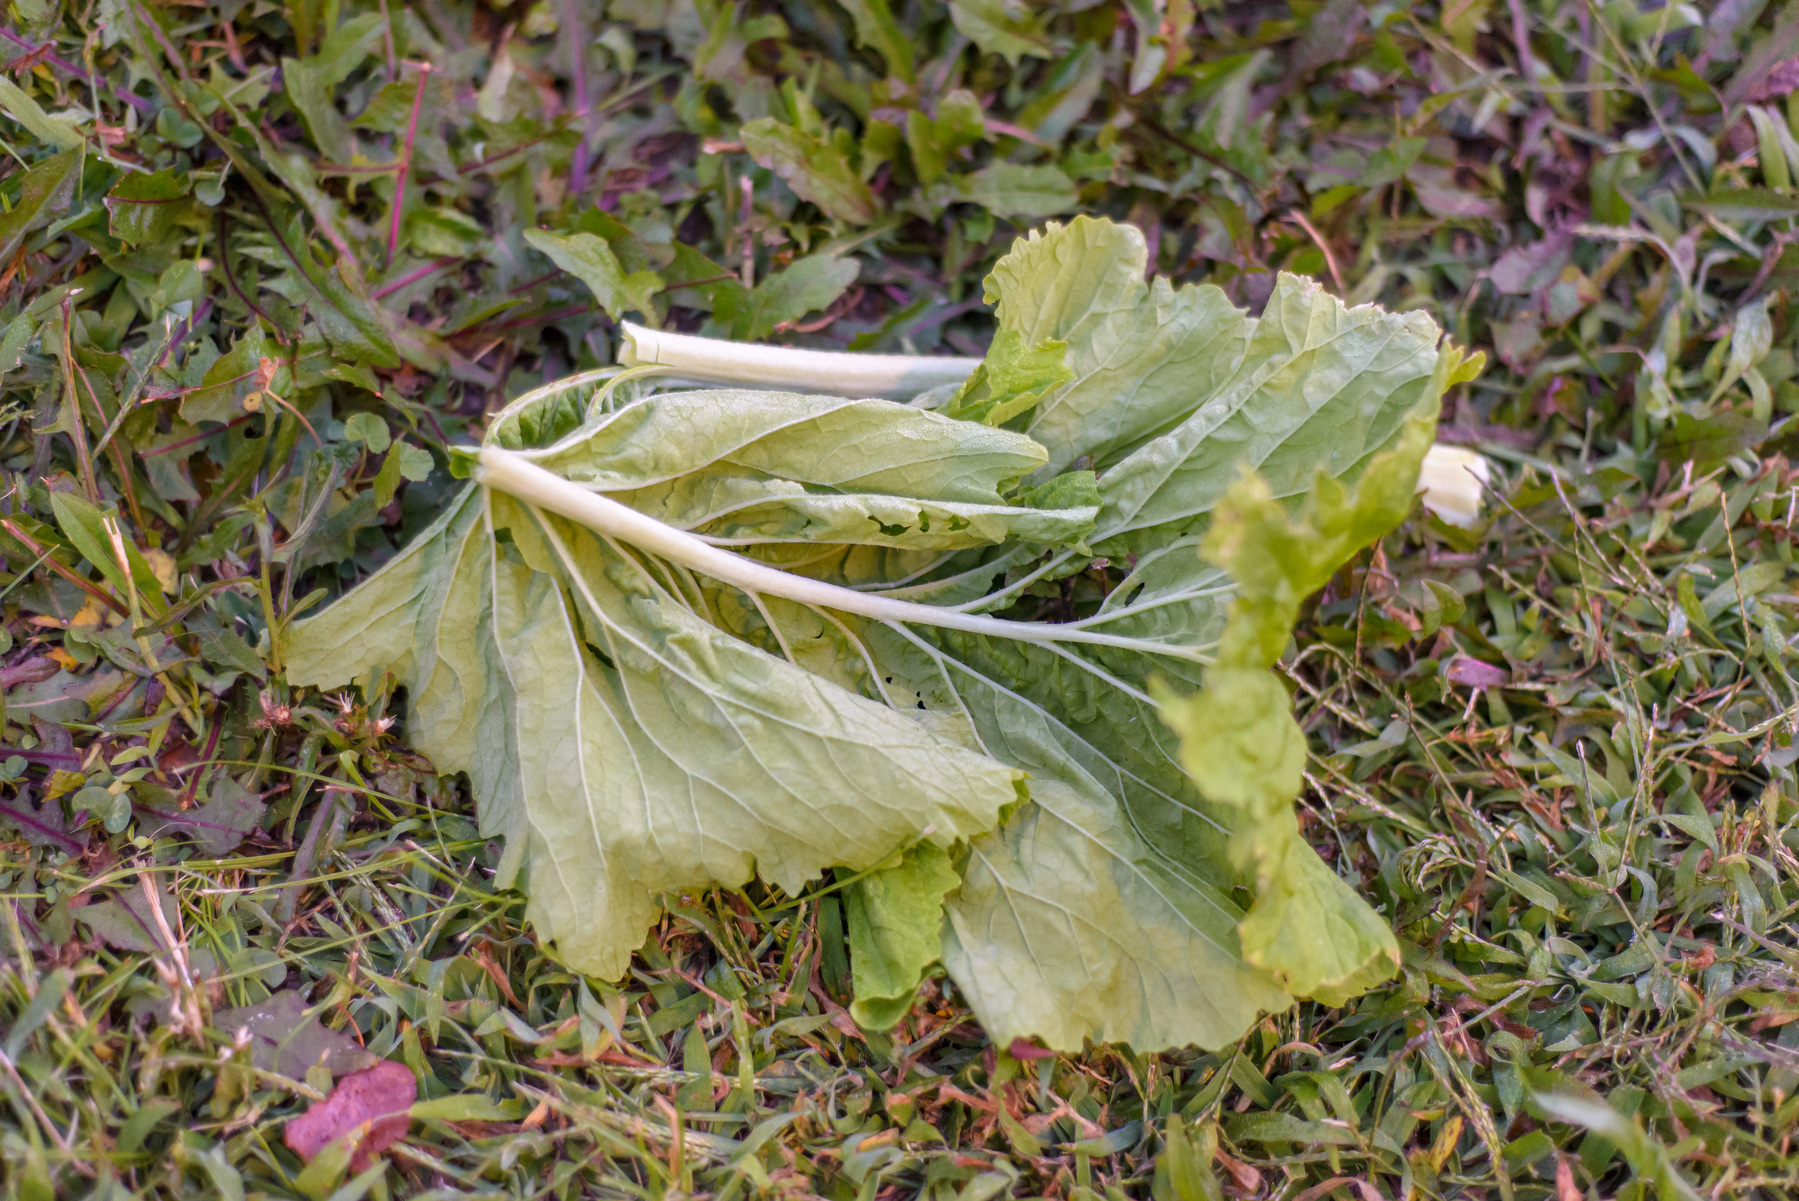 Crumpled kale-like leaf on the grass.